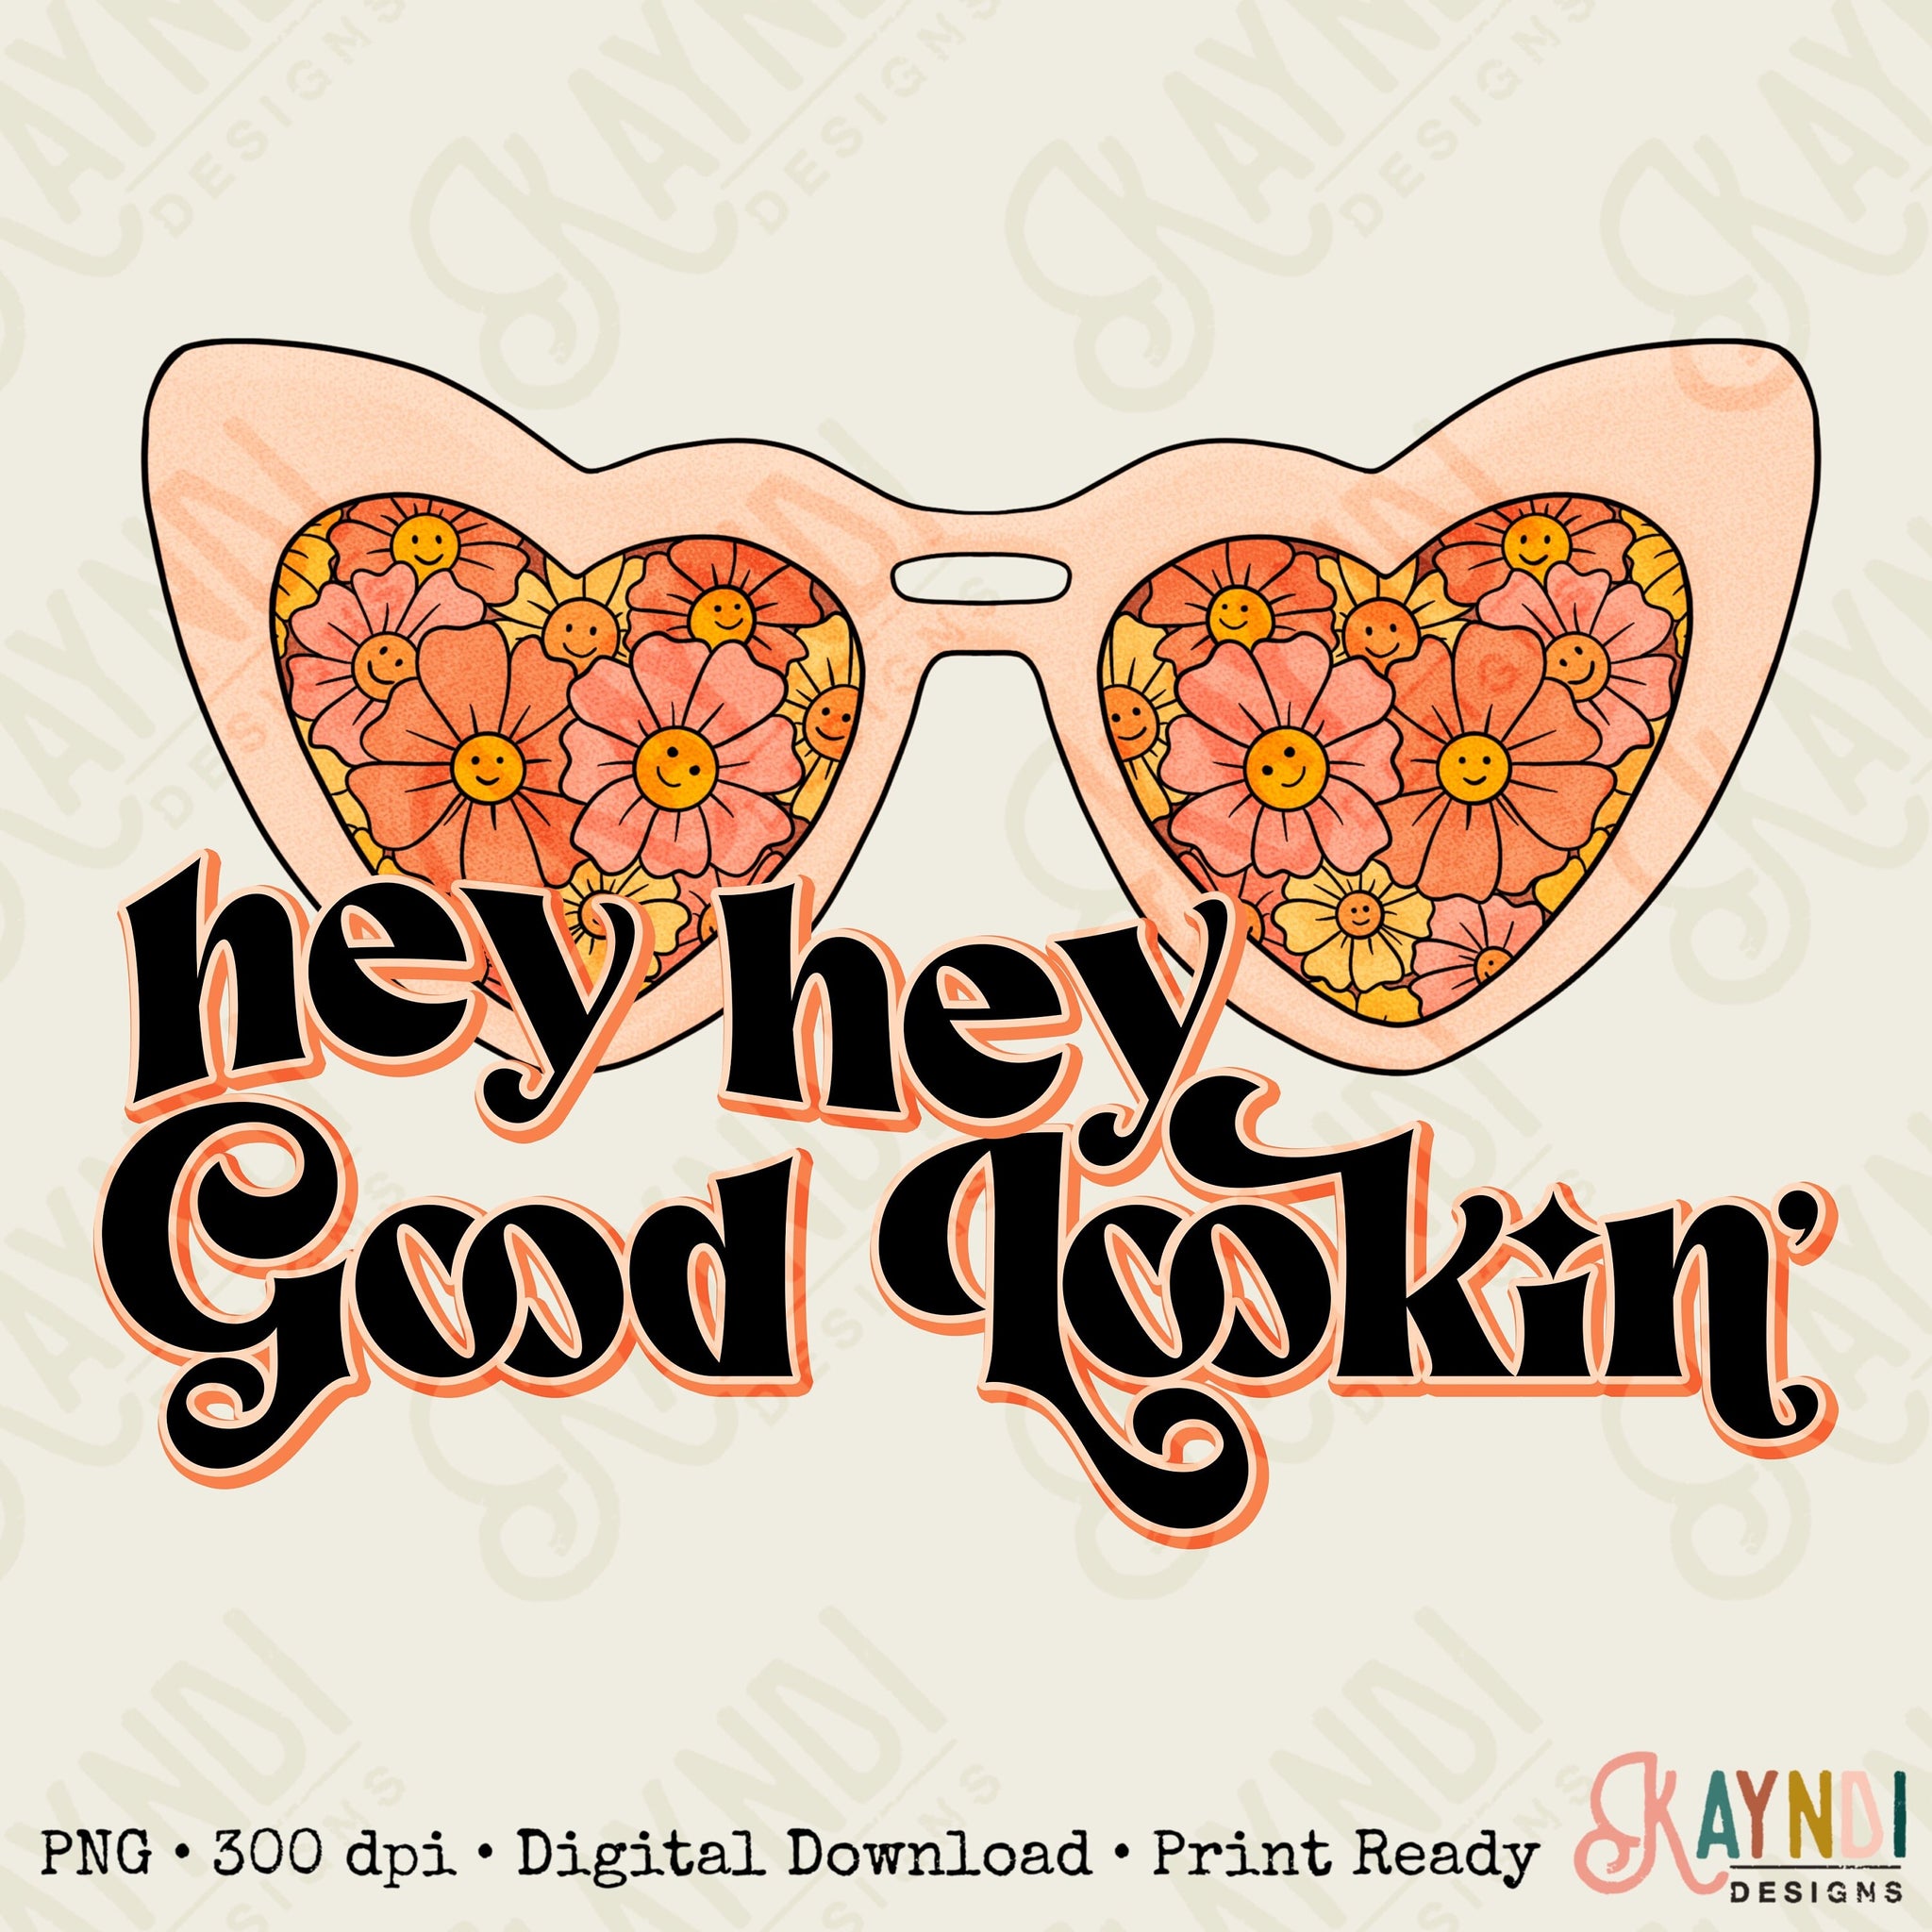 Hey Hey Good Lookin Sublimation Design PNG Digital Download Printable Retro Vintage Boho Hippie Vibe Flower Child Groovy Sunglasses 60s 70s